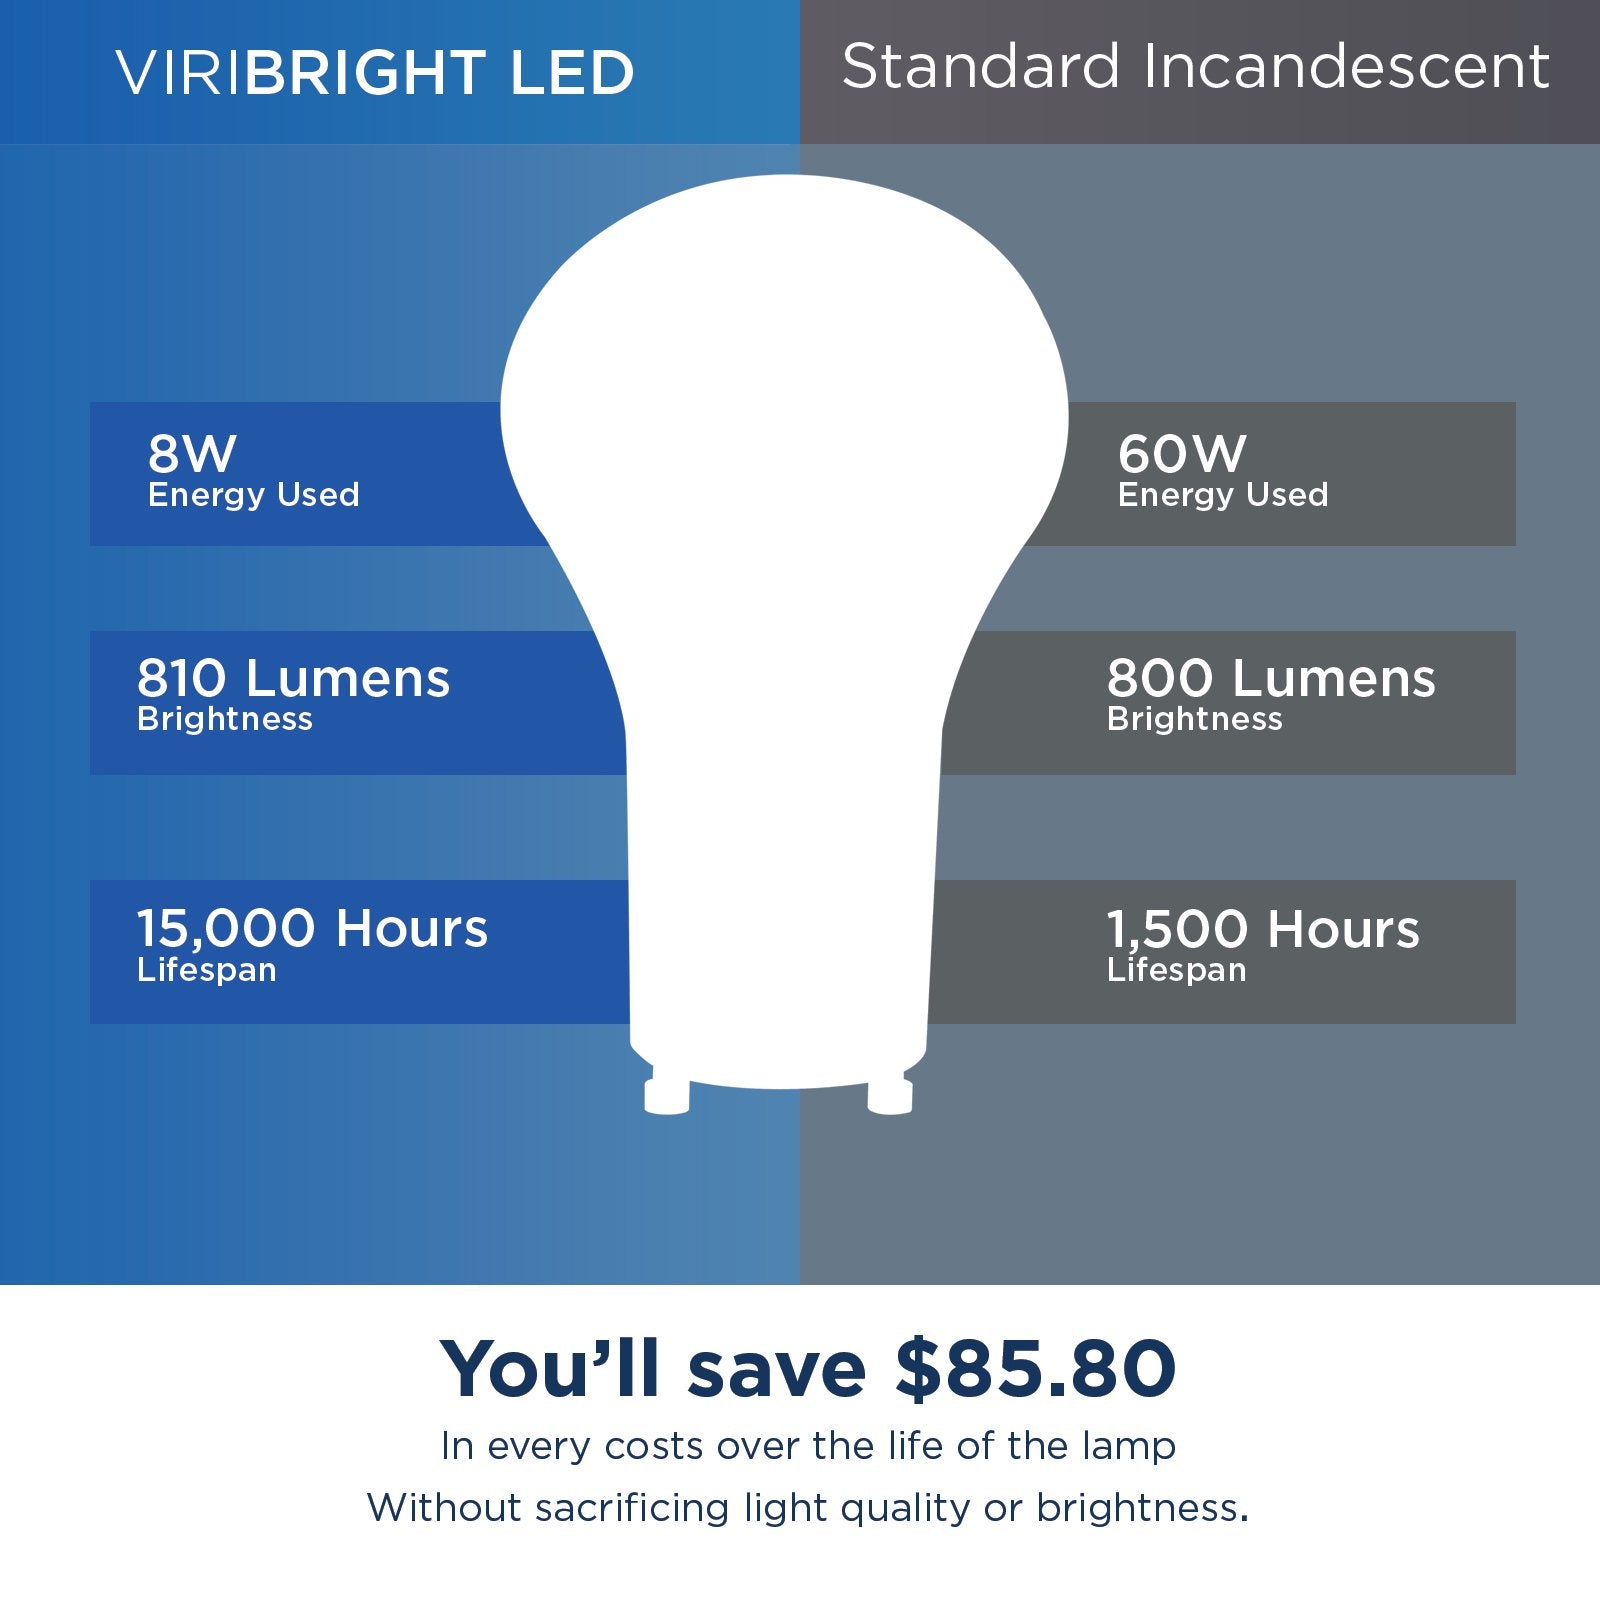 Viribright 60-Watt Equivalent A19 GU24 General Purpose LED Light Bulb